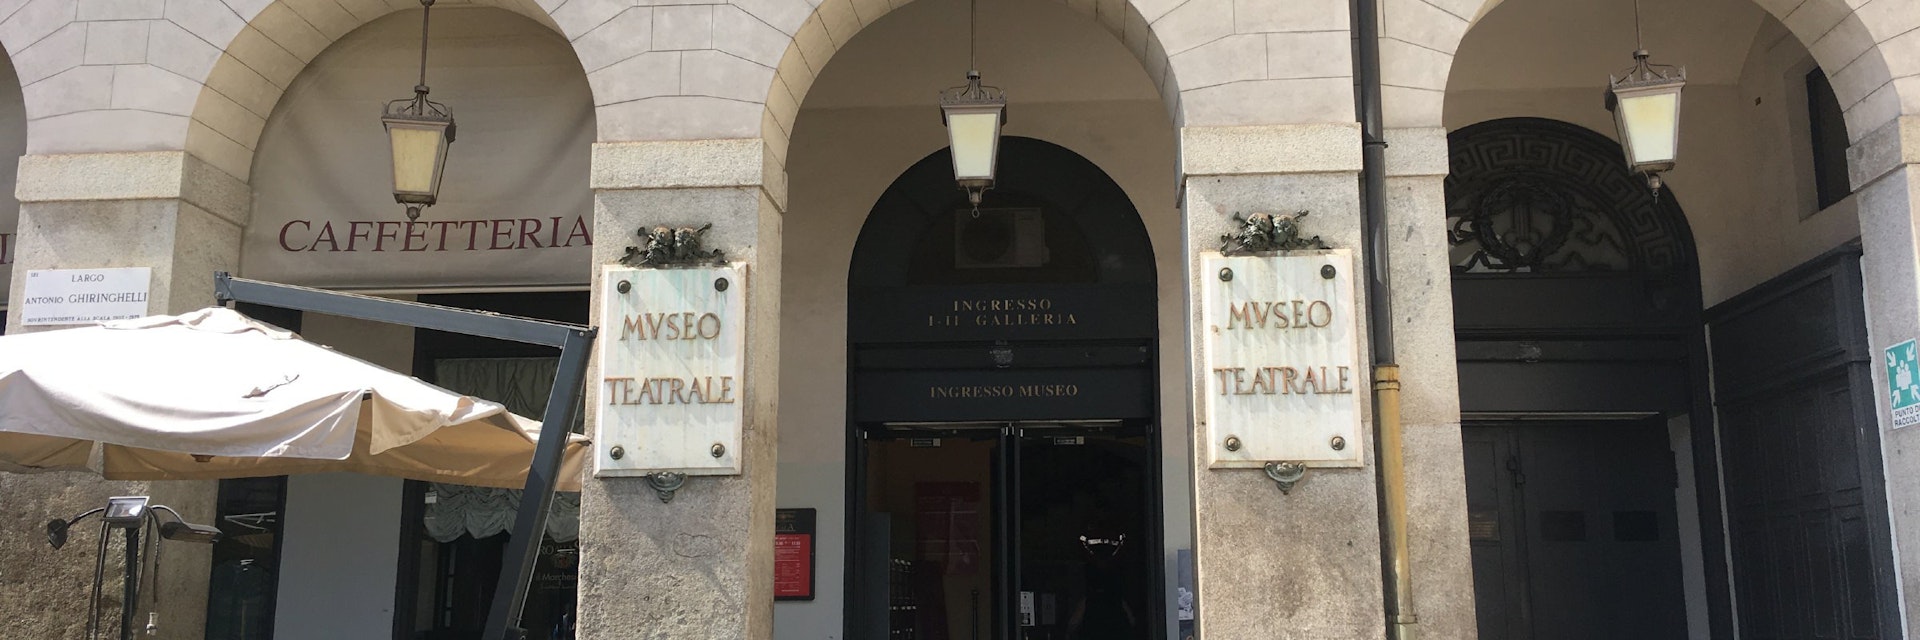 Museo Teatrale alla Scala exterior.